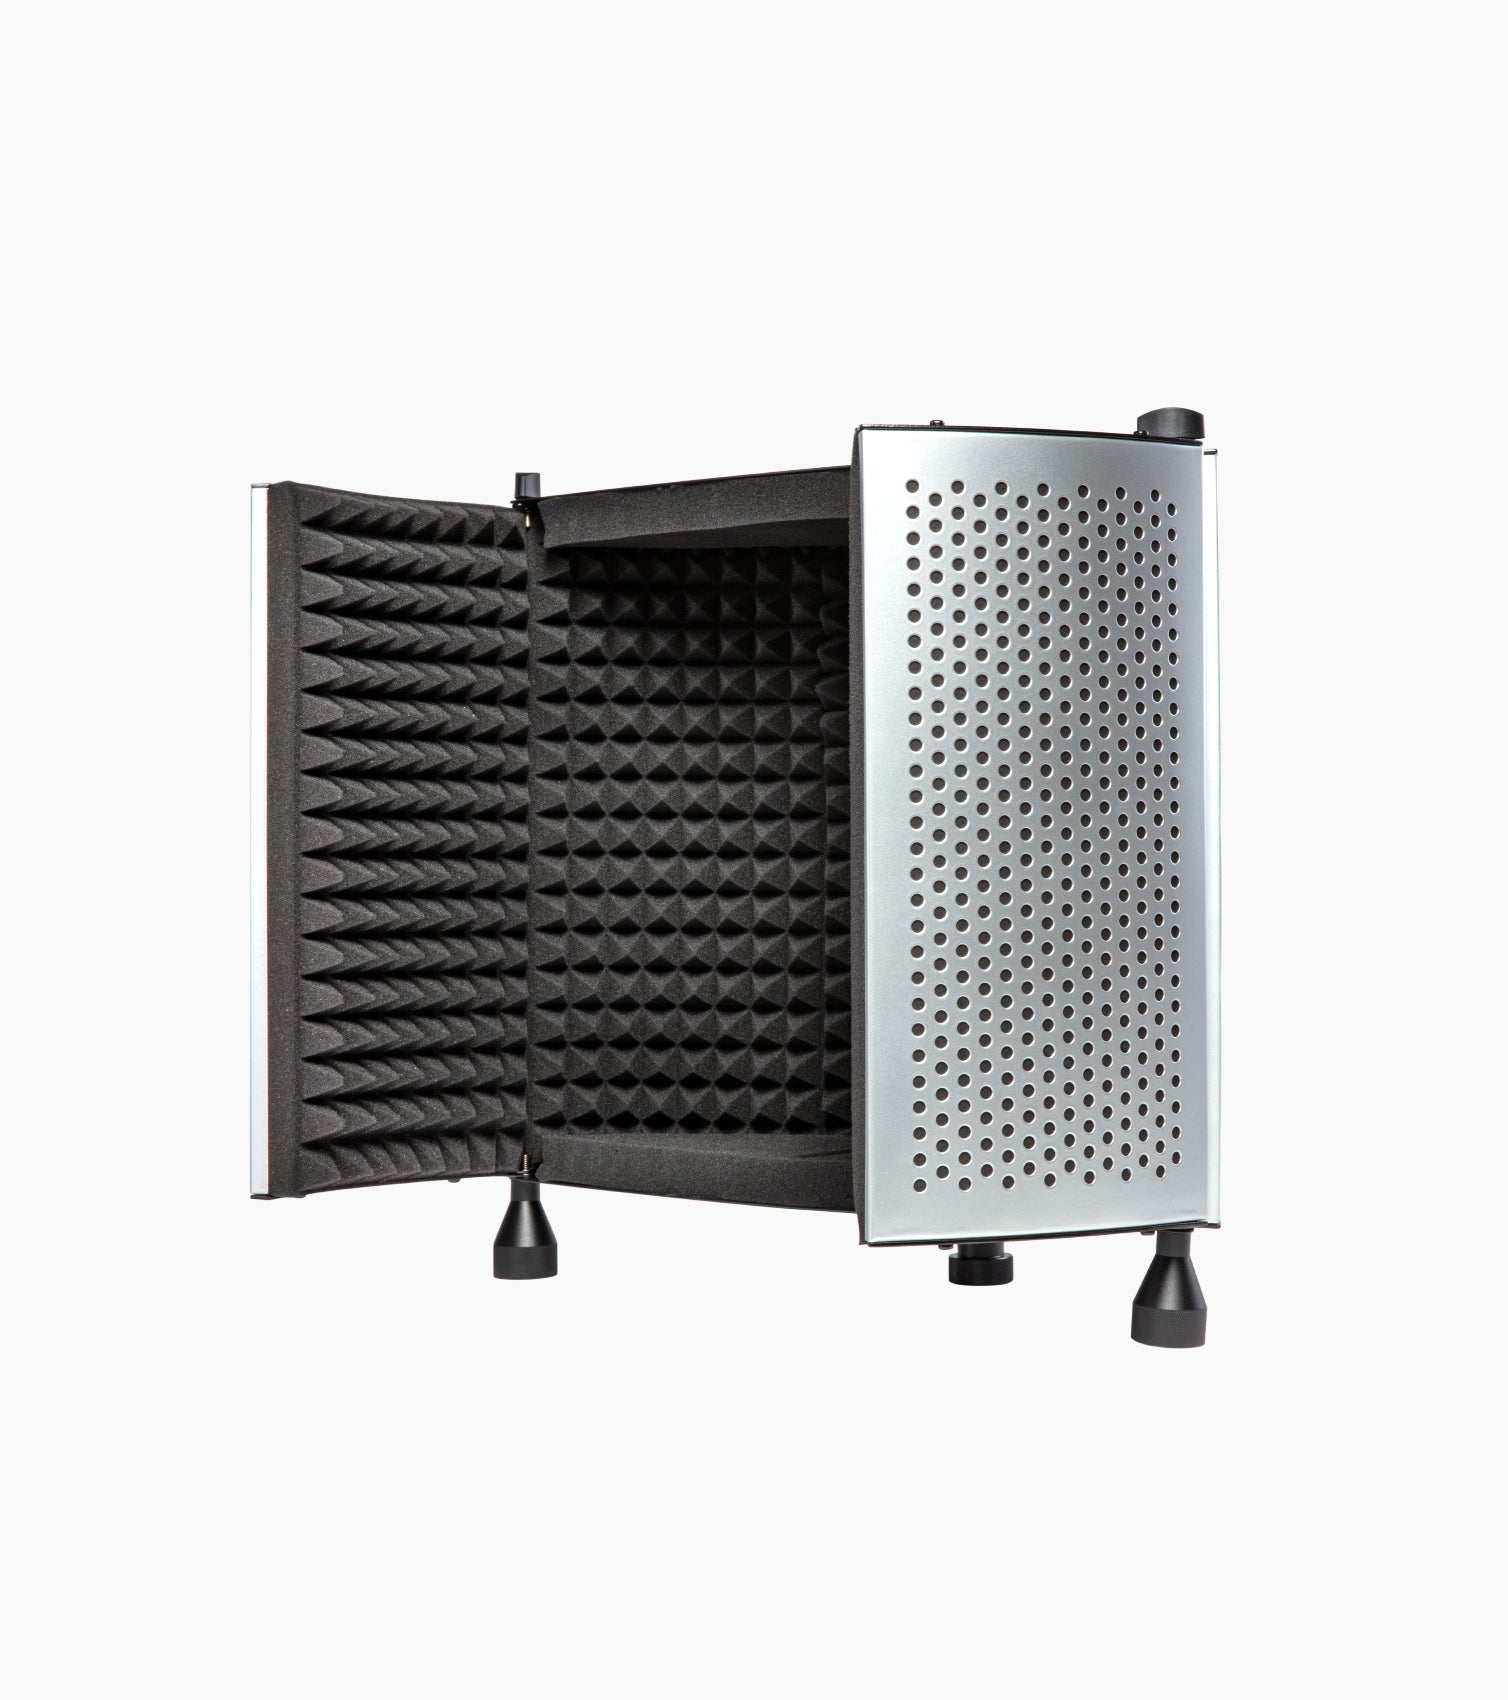 VRI-50 freestanding sound absorbing vocal shield